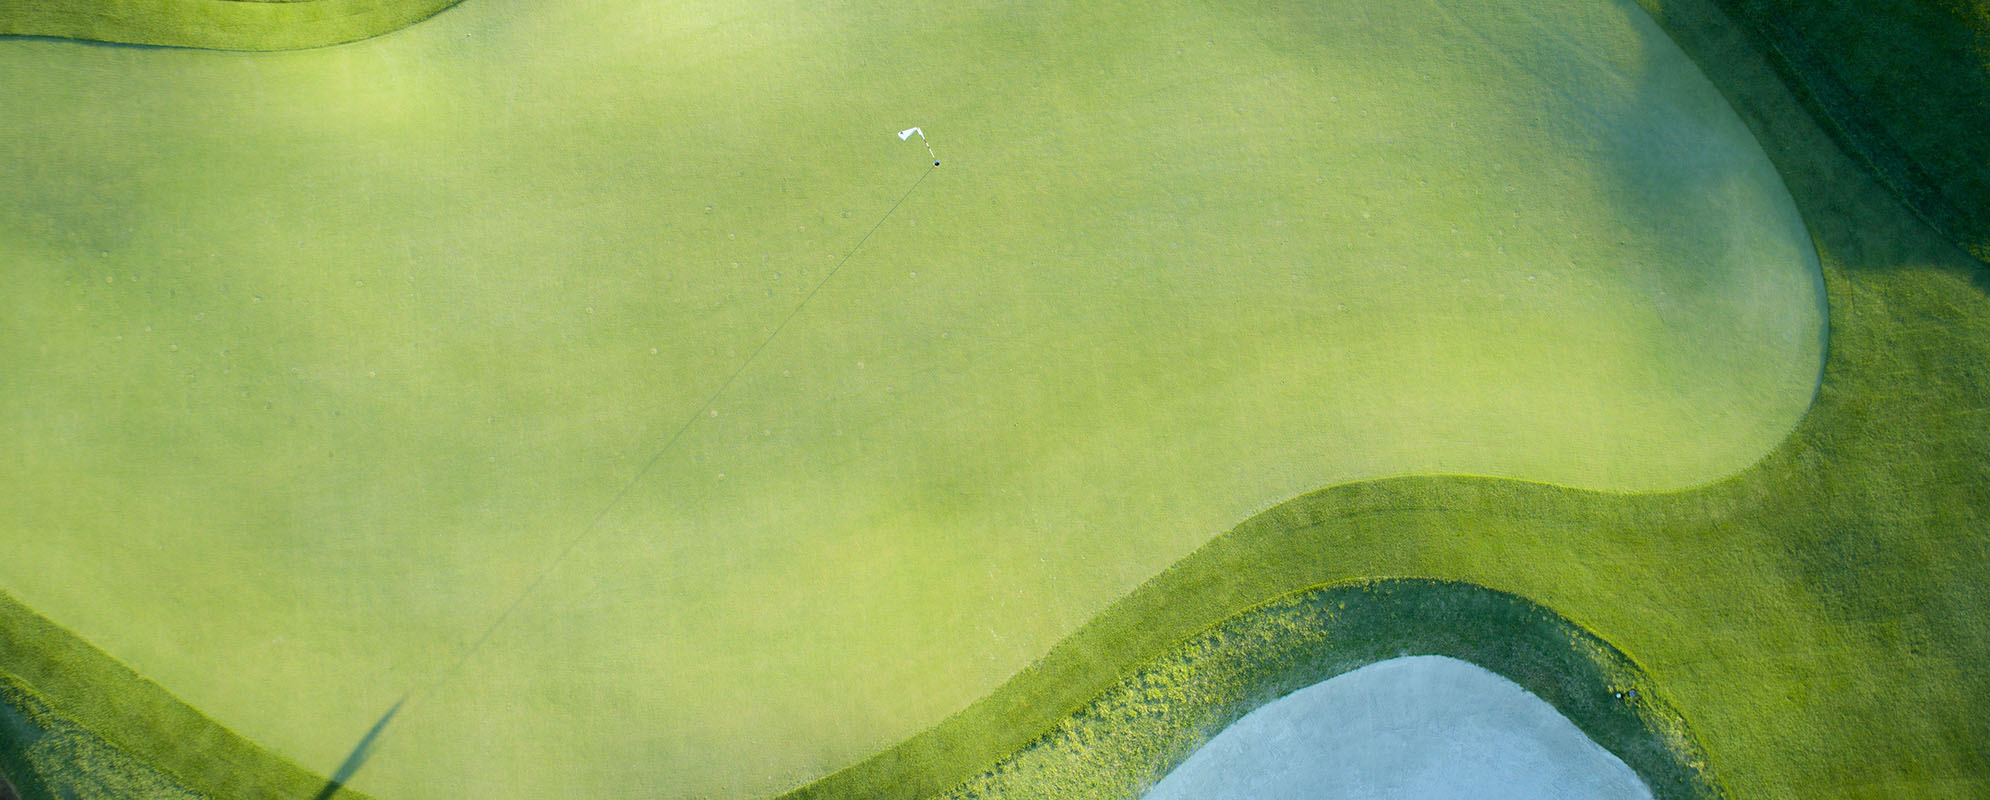 Overhead shot of a flagstick on a golf course. 